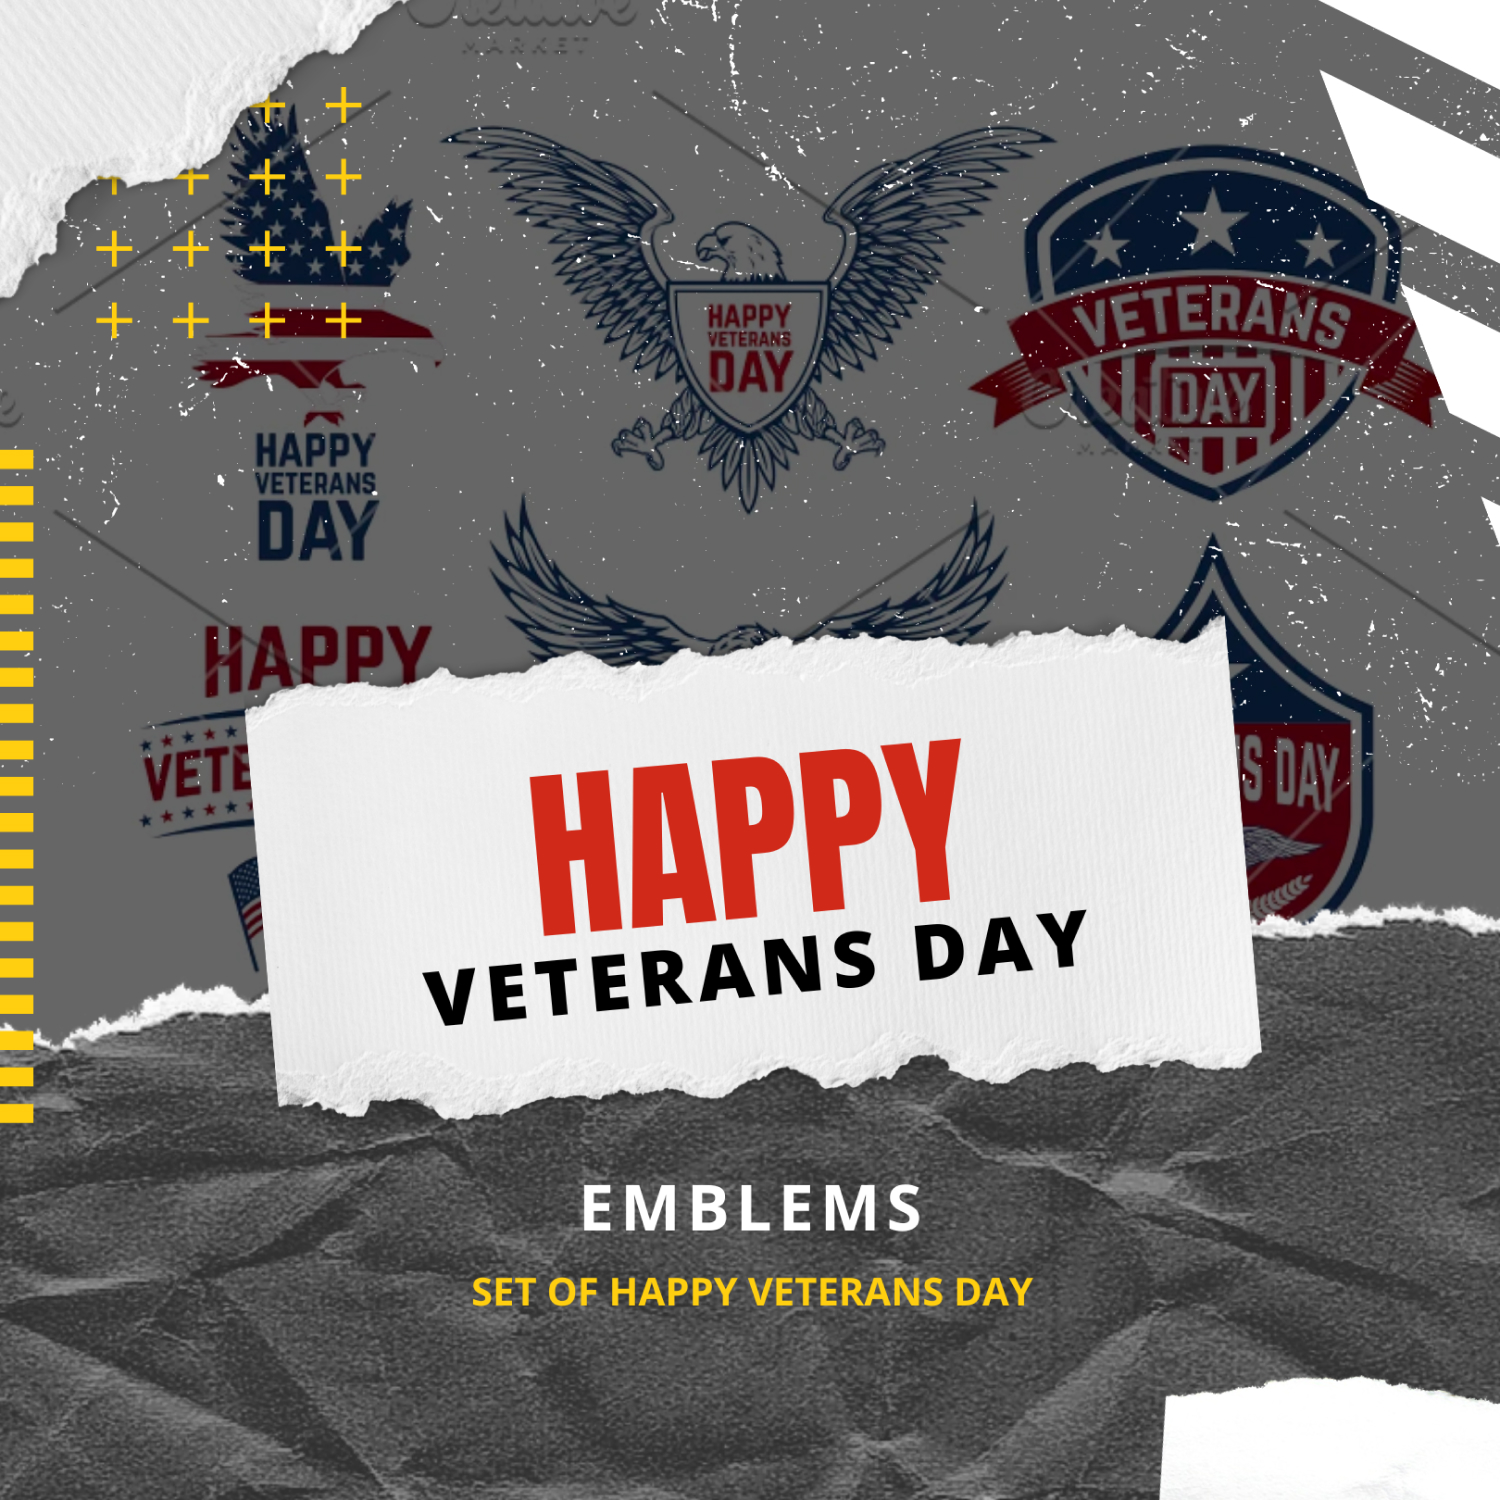 Set of Happy Veterans Day emblems.